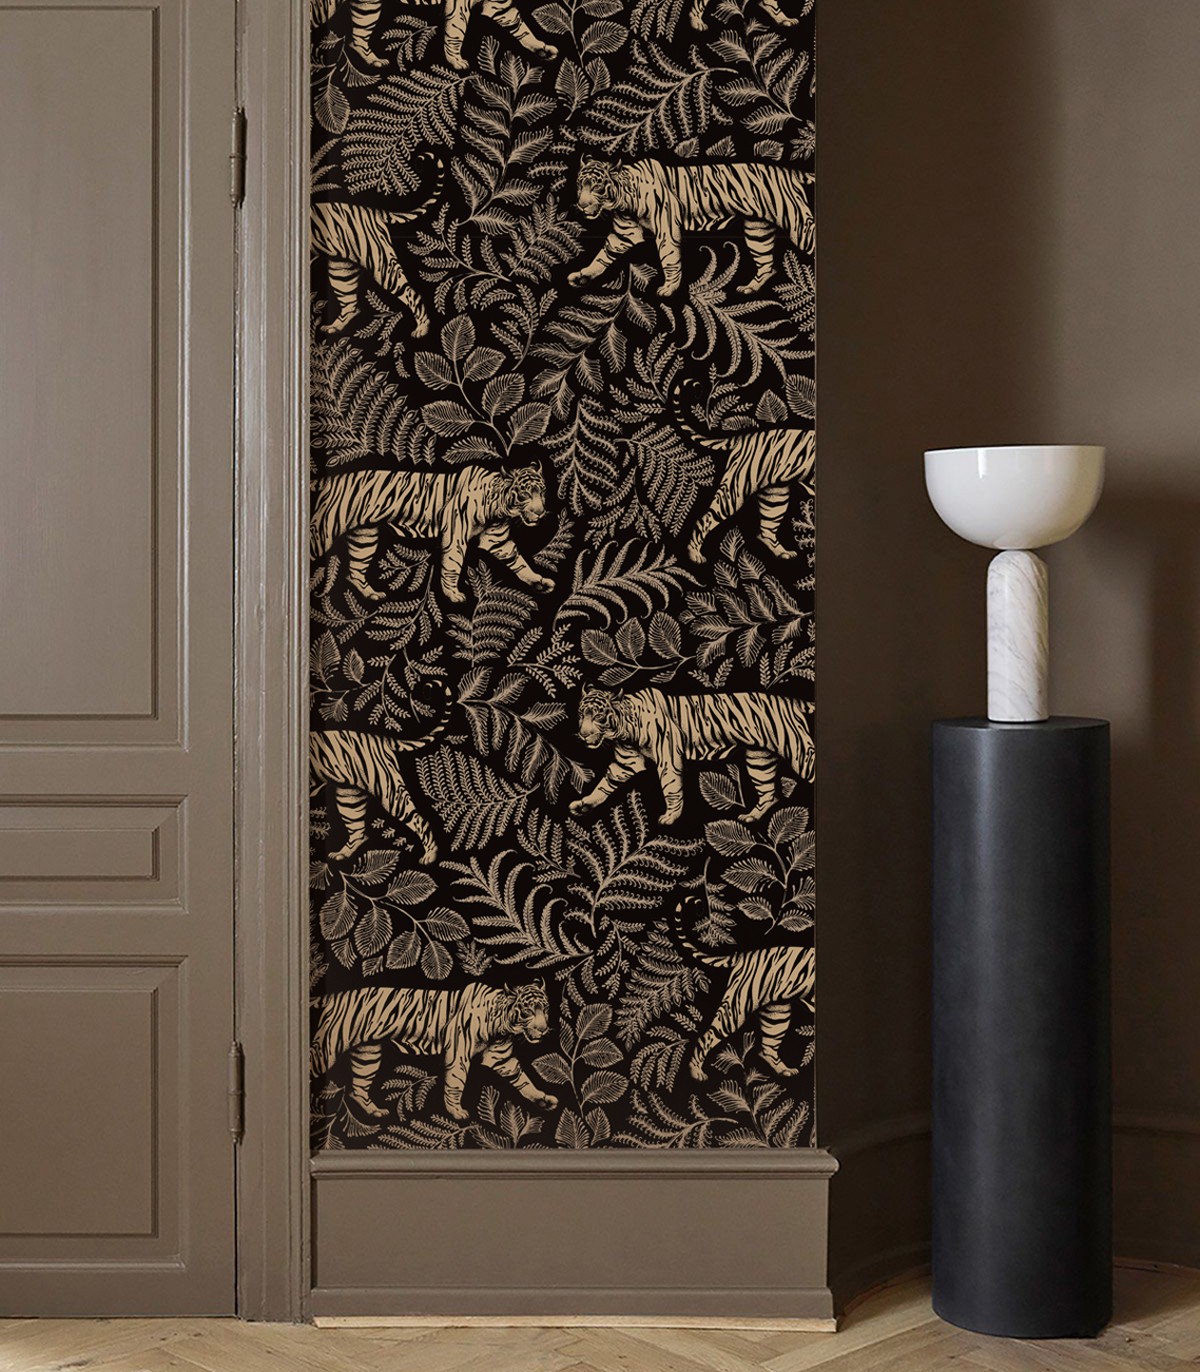 Camouflaged Tiger Tapete - Wallcolors  - Exklusive Hintergrundbilder